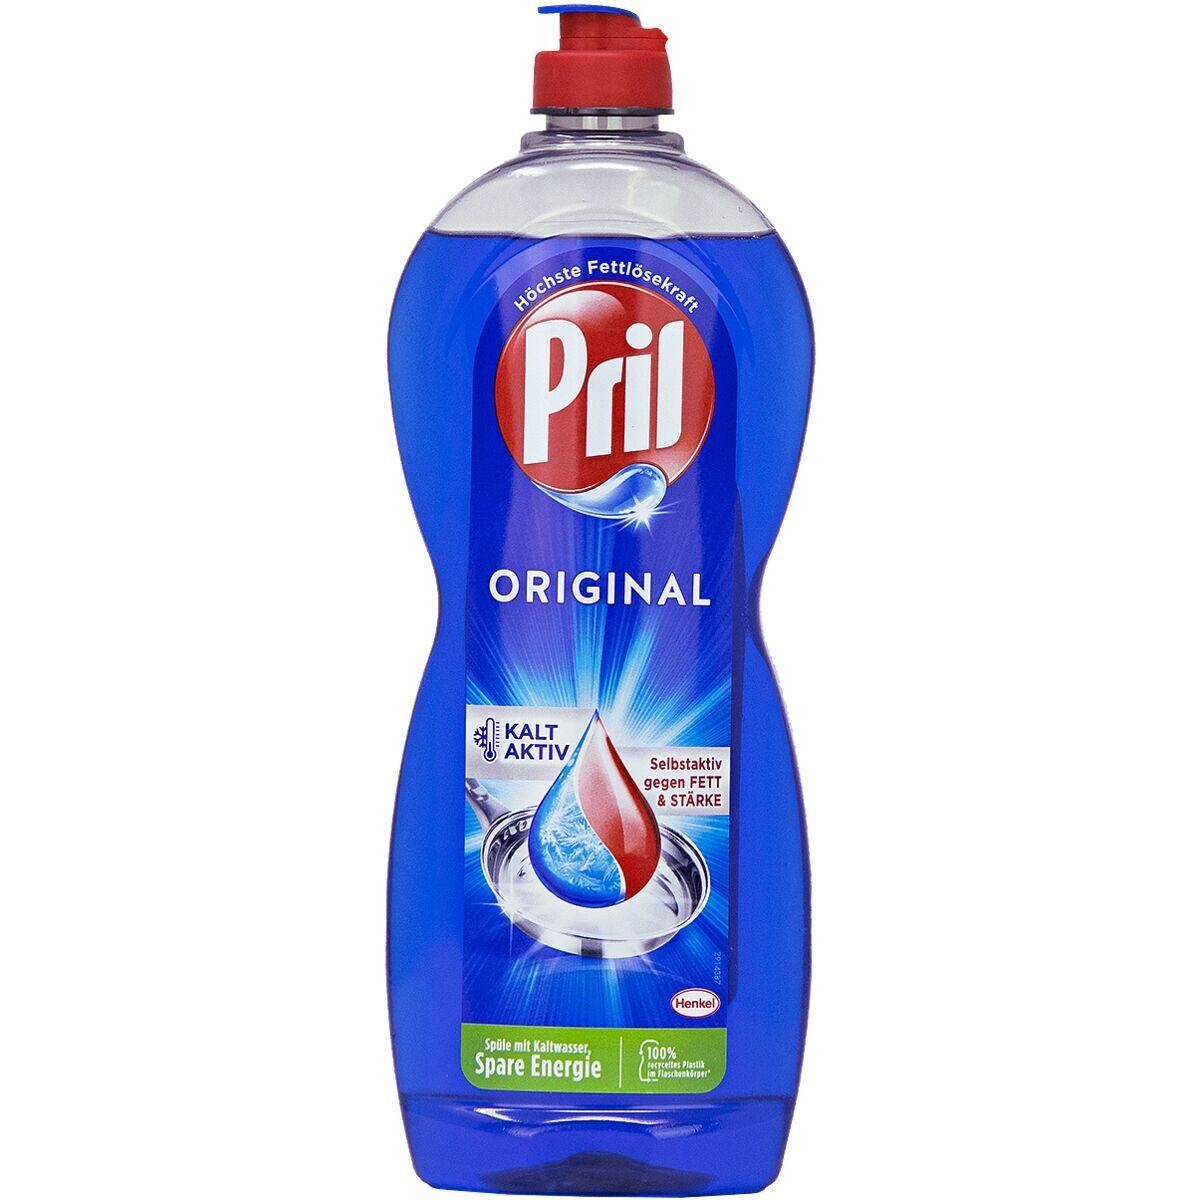 PRIL Original Geschirrspülmittel (675 ml, Fettlösekraft) höchste Kalt-Aktiv-Formel / mit